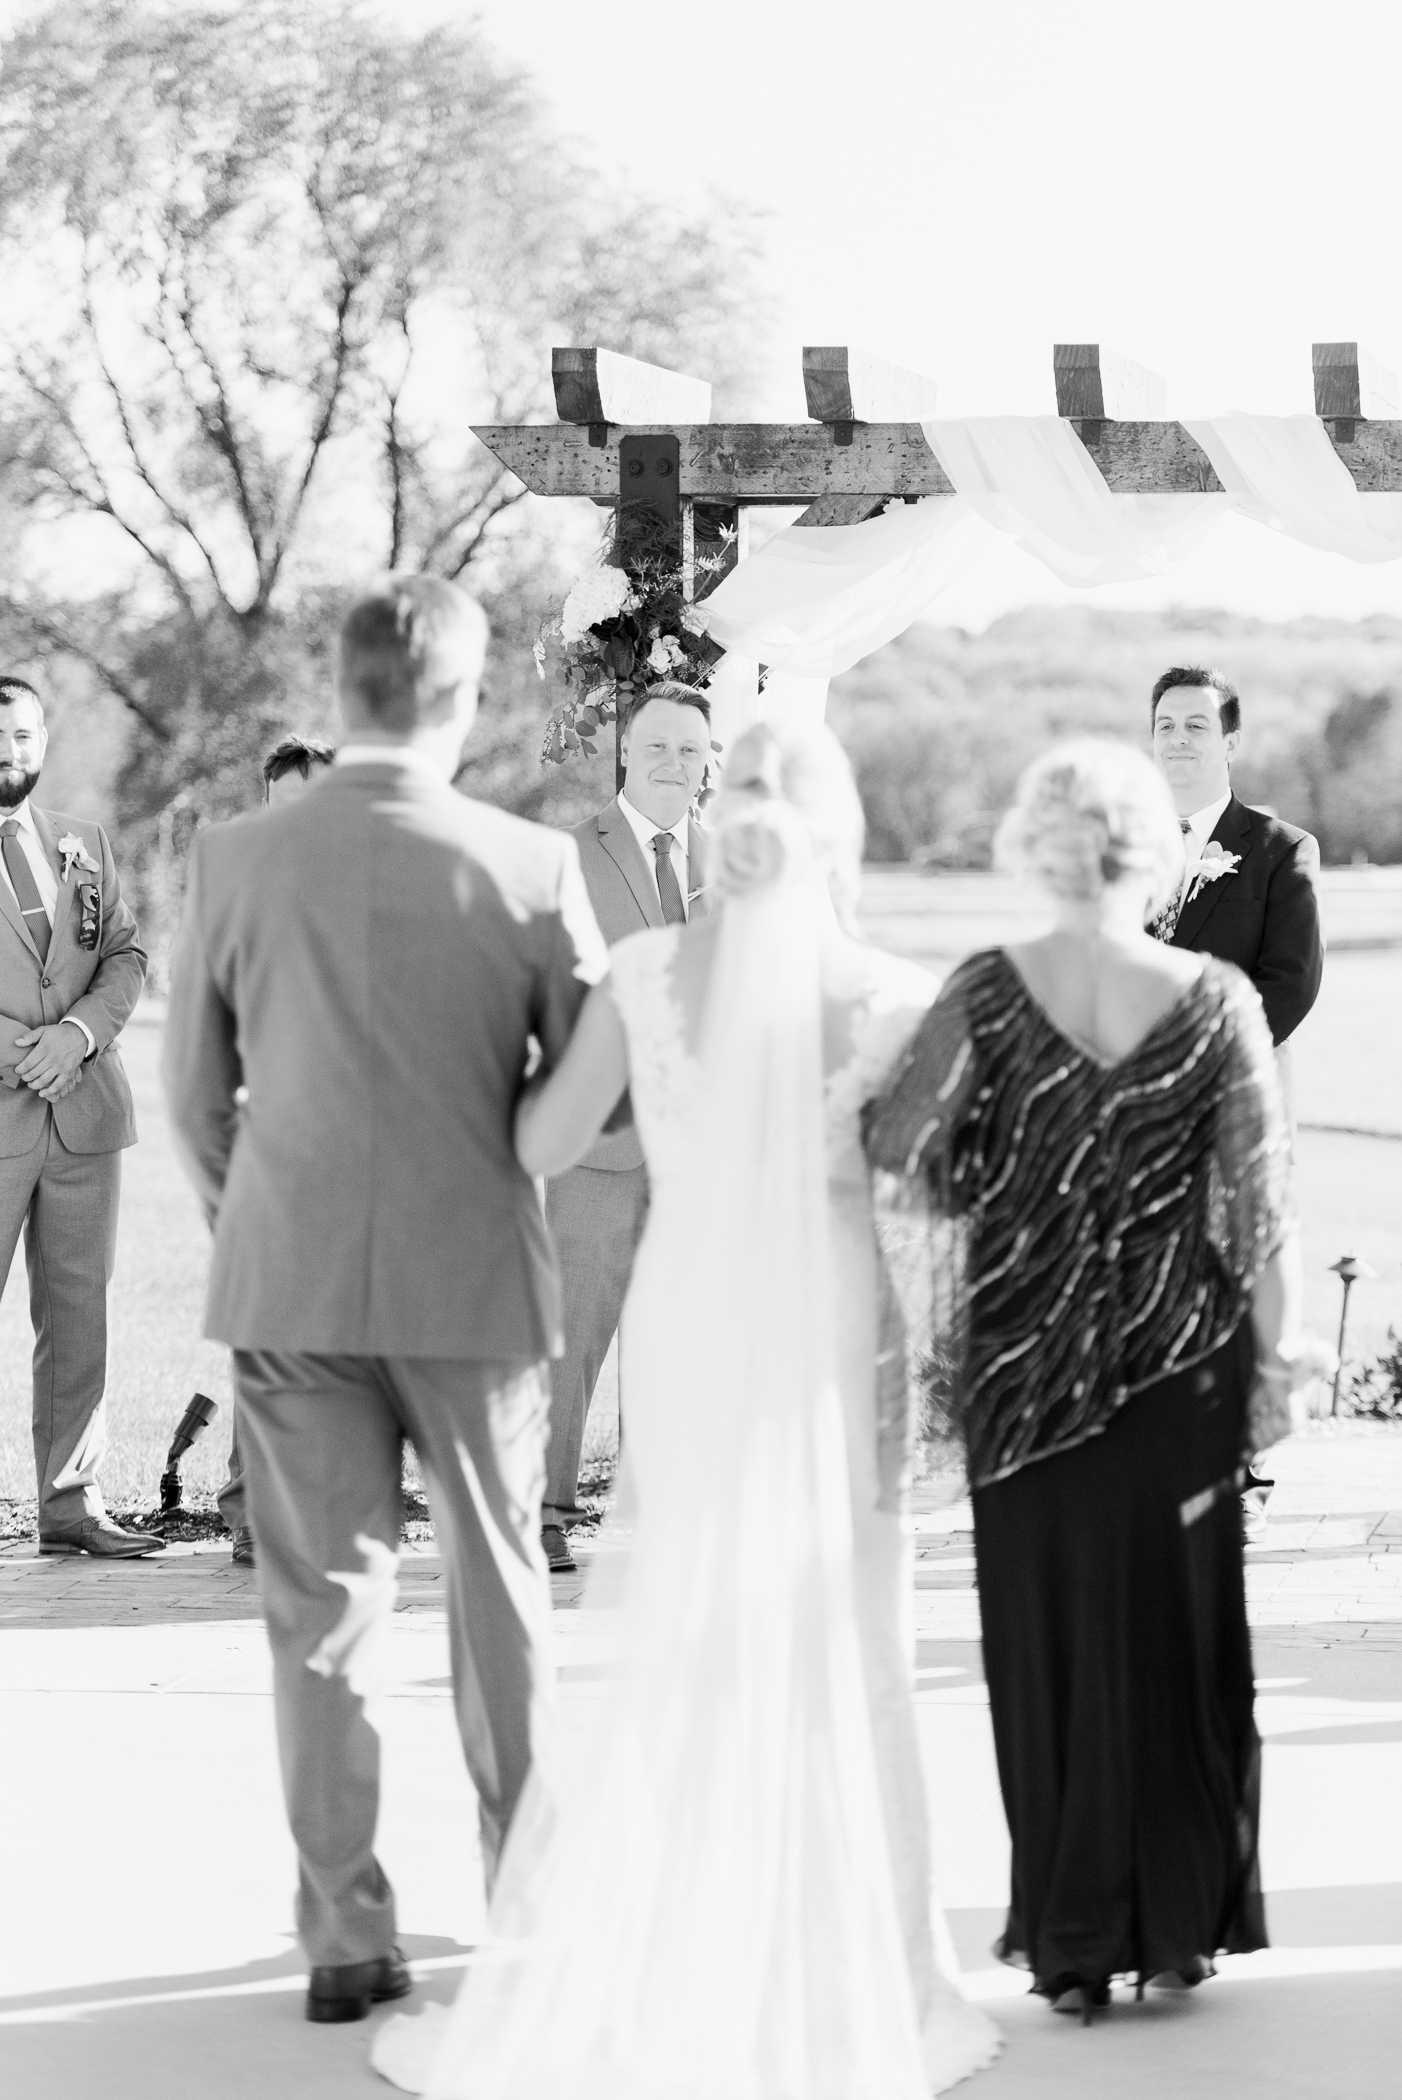 The Oak Golf Course Wedding Photographers